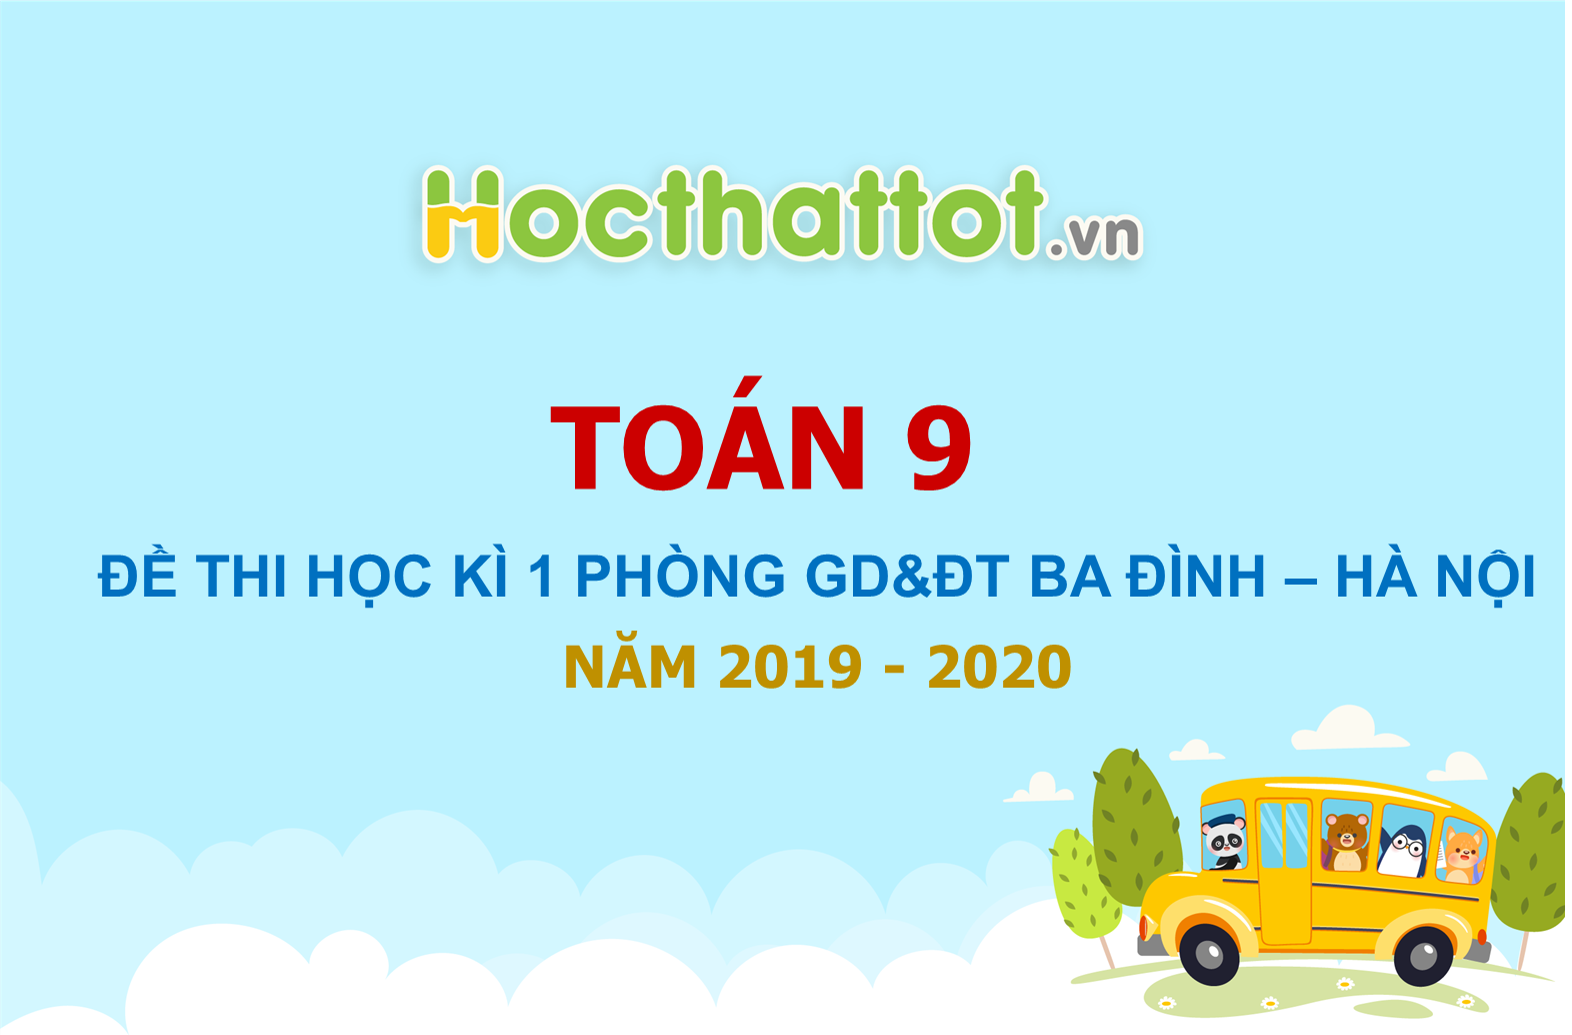 de-thi-hoc-ki-1-toan-9-nam-2019-2020-phong-gddt-ba-dinh-ha-noi.pdf